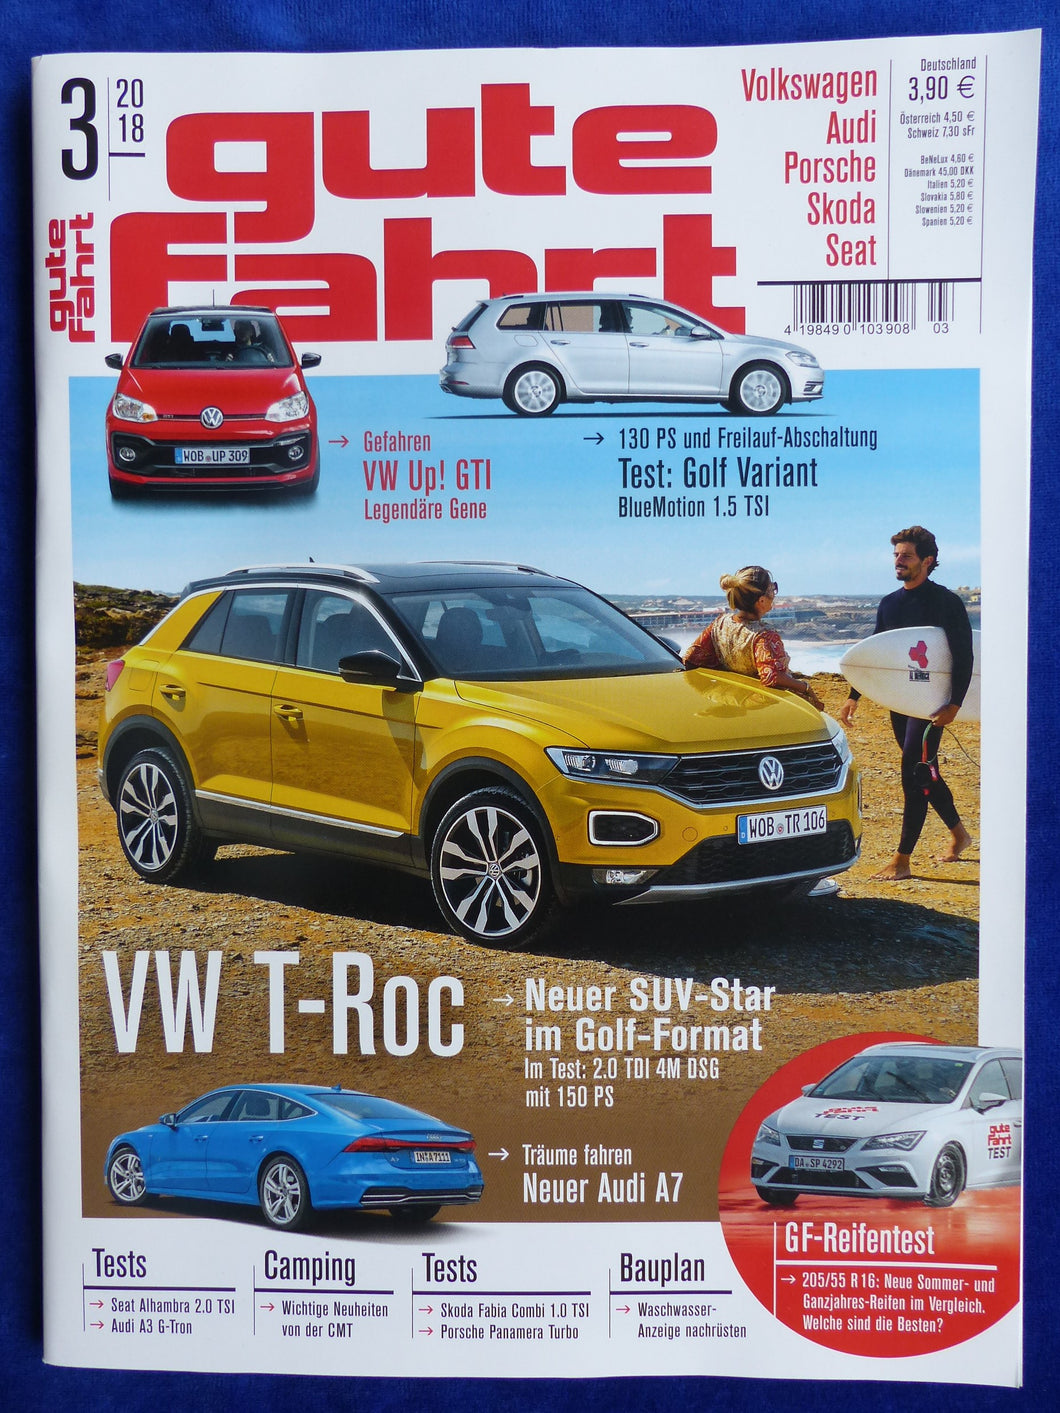 VW Audi Magazin Gute Fahrt 03/2018 - VW T-Roc up! GTI Golf Audi A3 A7 Porsche